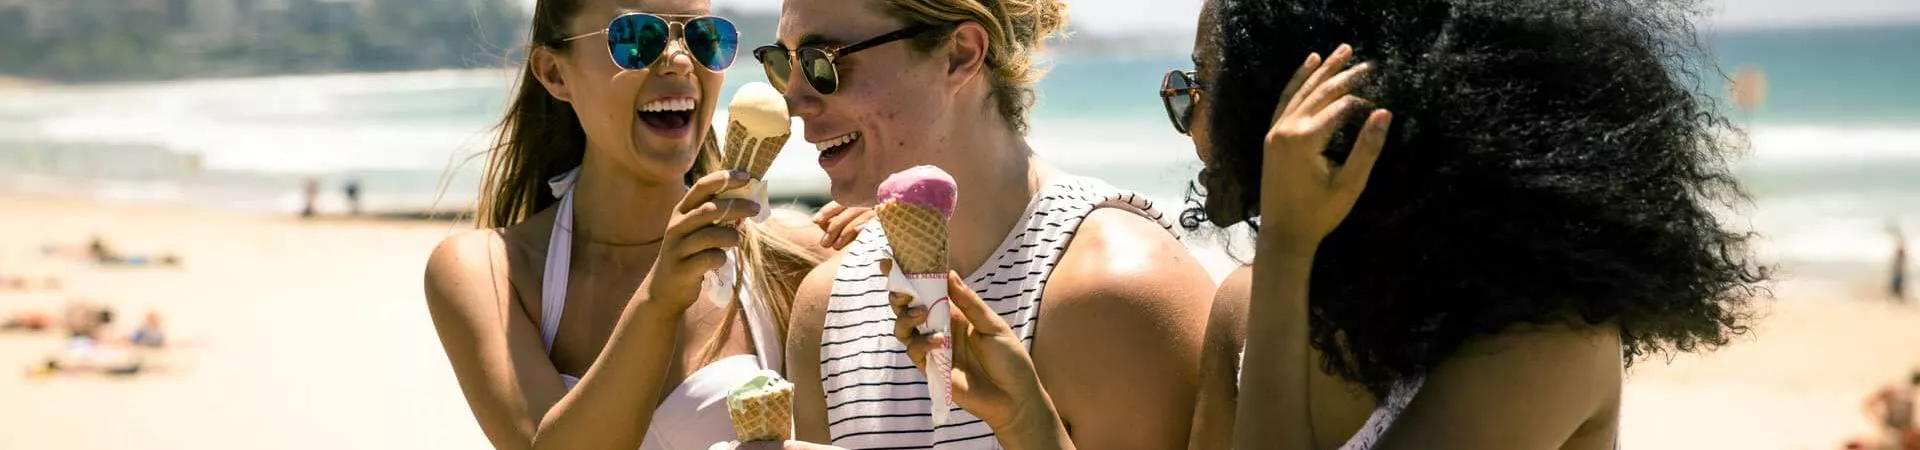 Group Near The Beach In Australia Eating Ice Creams